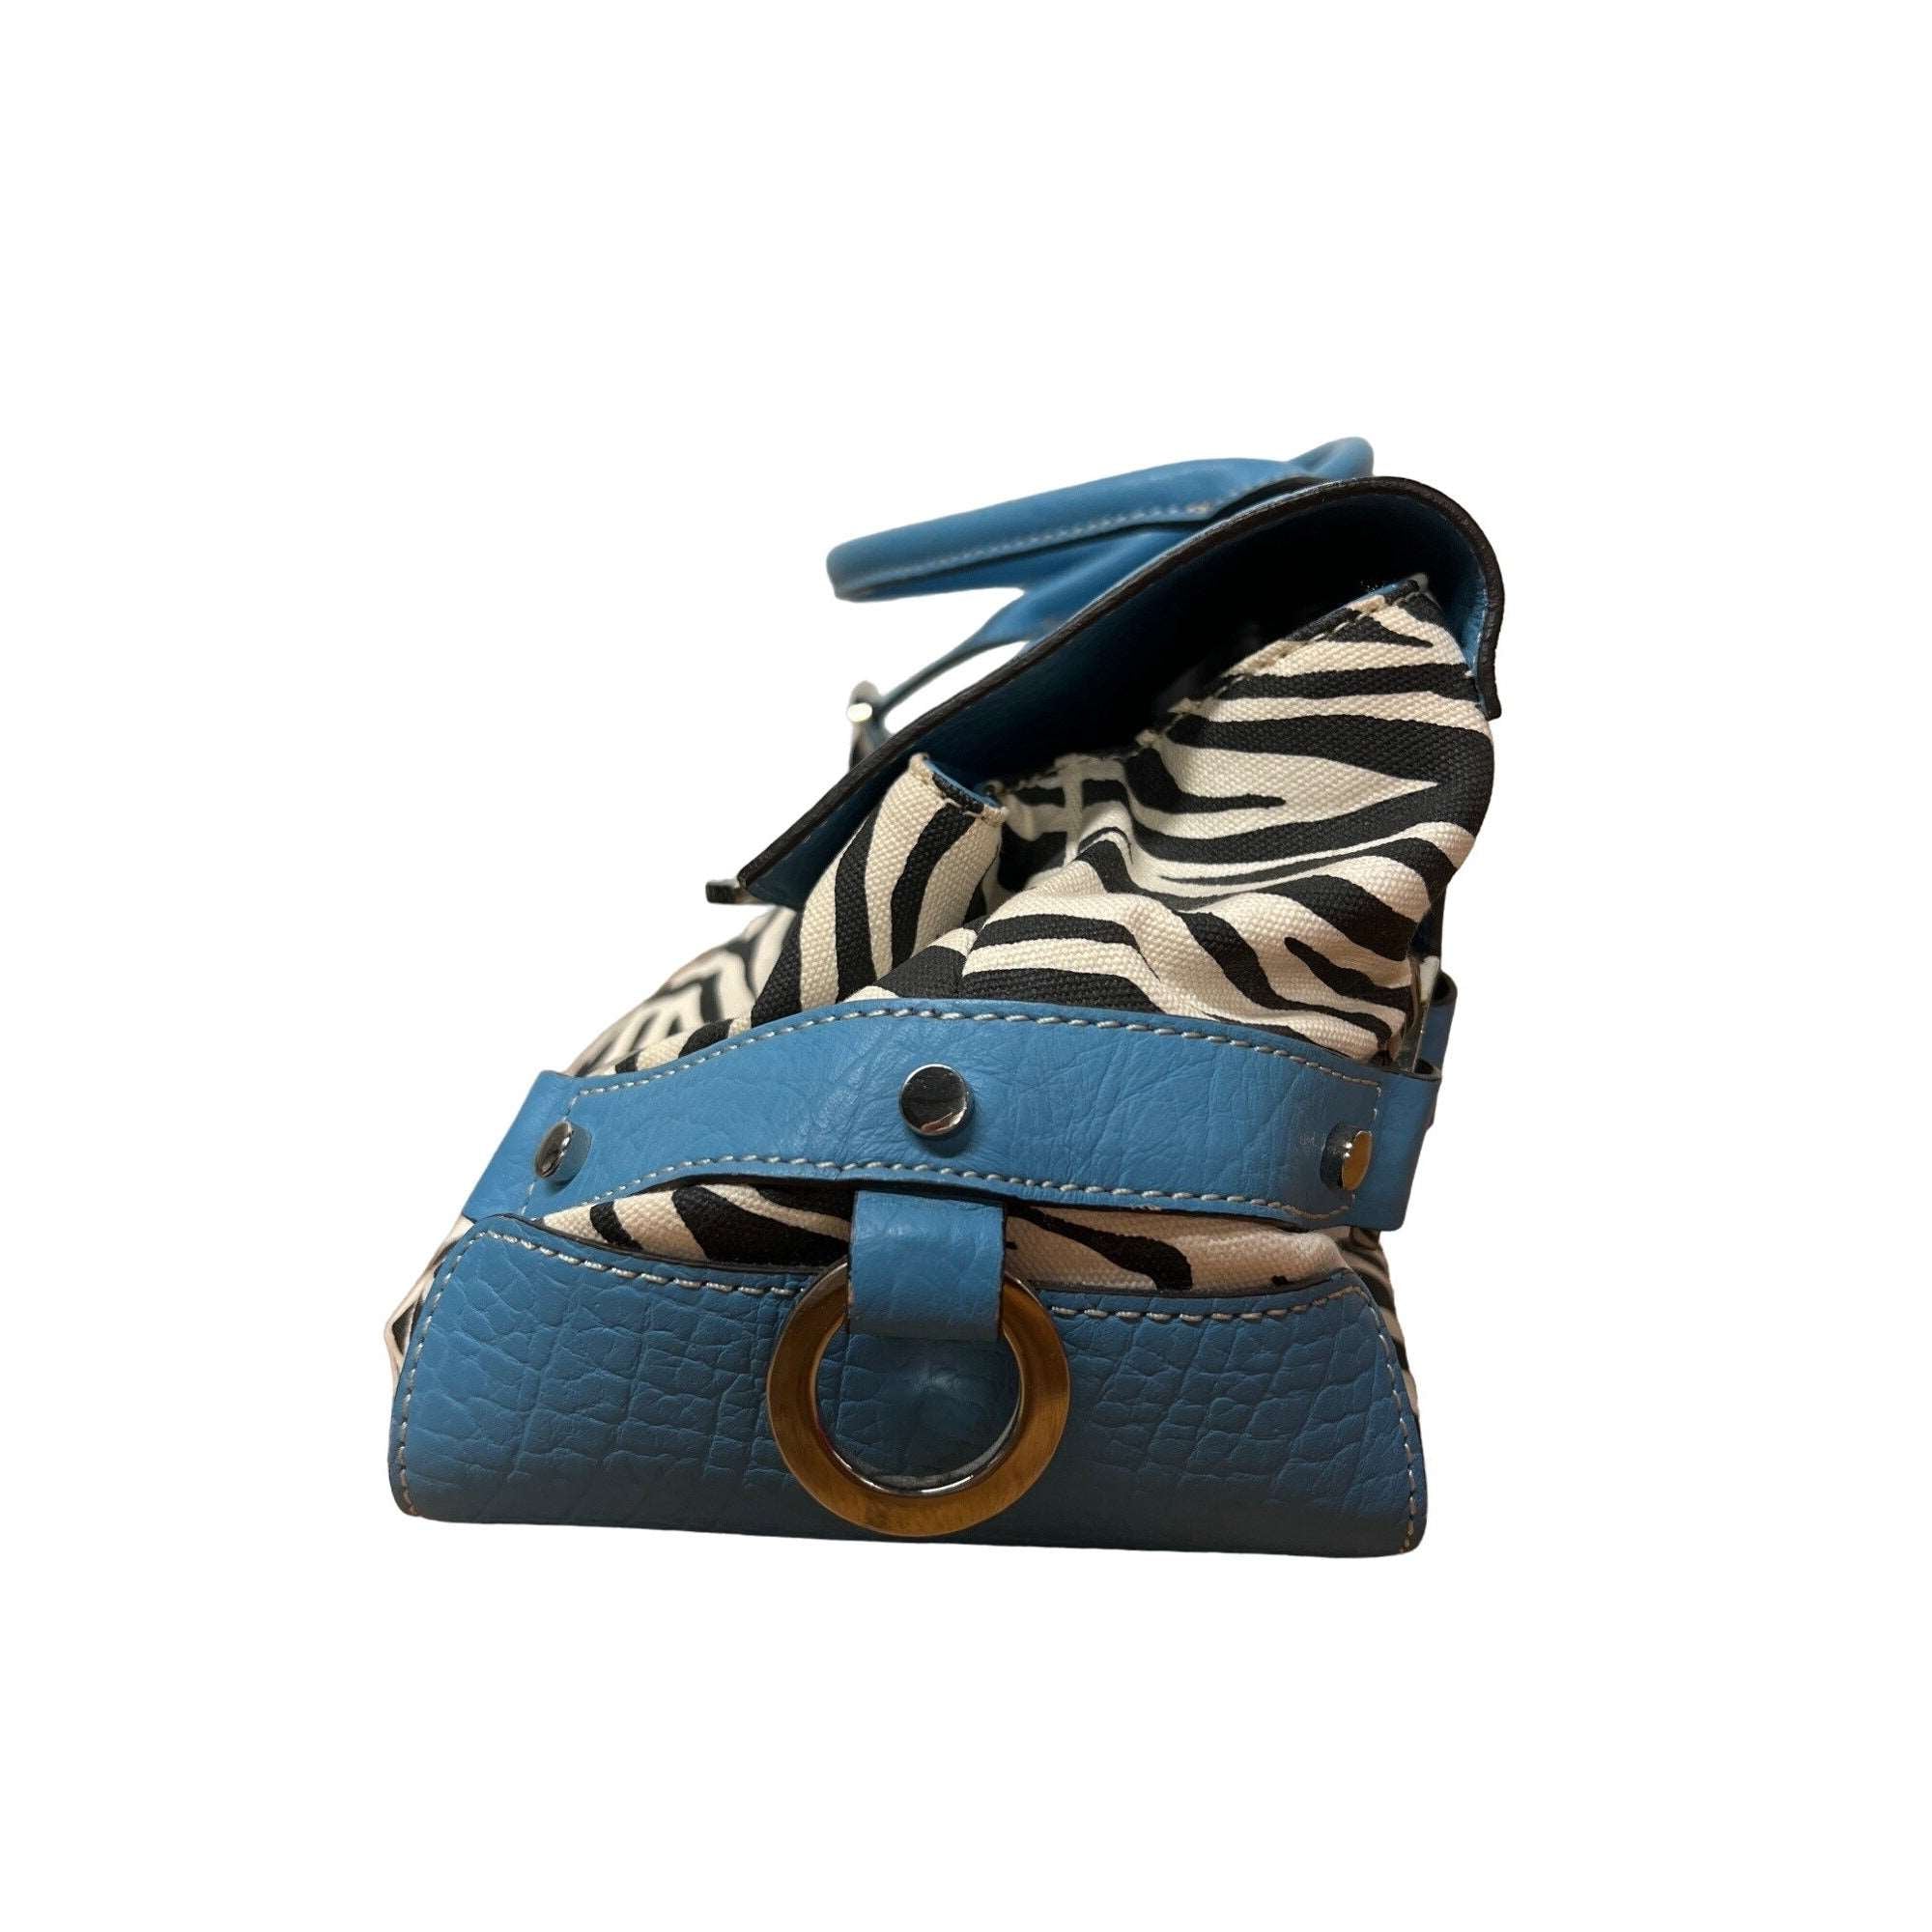 Adrienne Vittadini's Kayla: Eye-catching Blue Zebra Print Satchel Bag